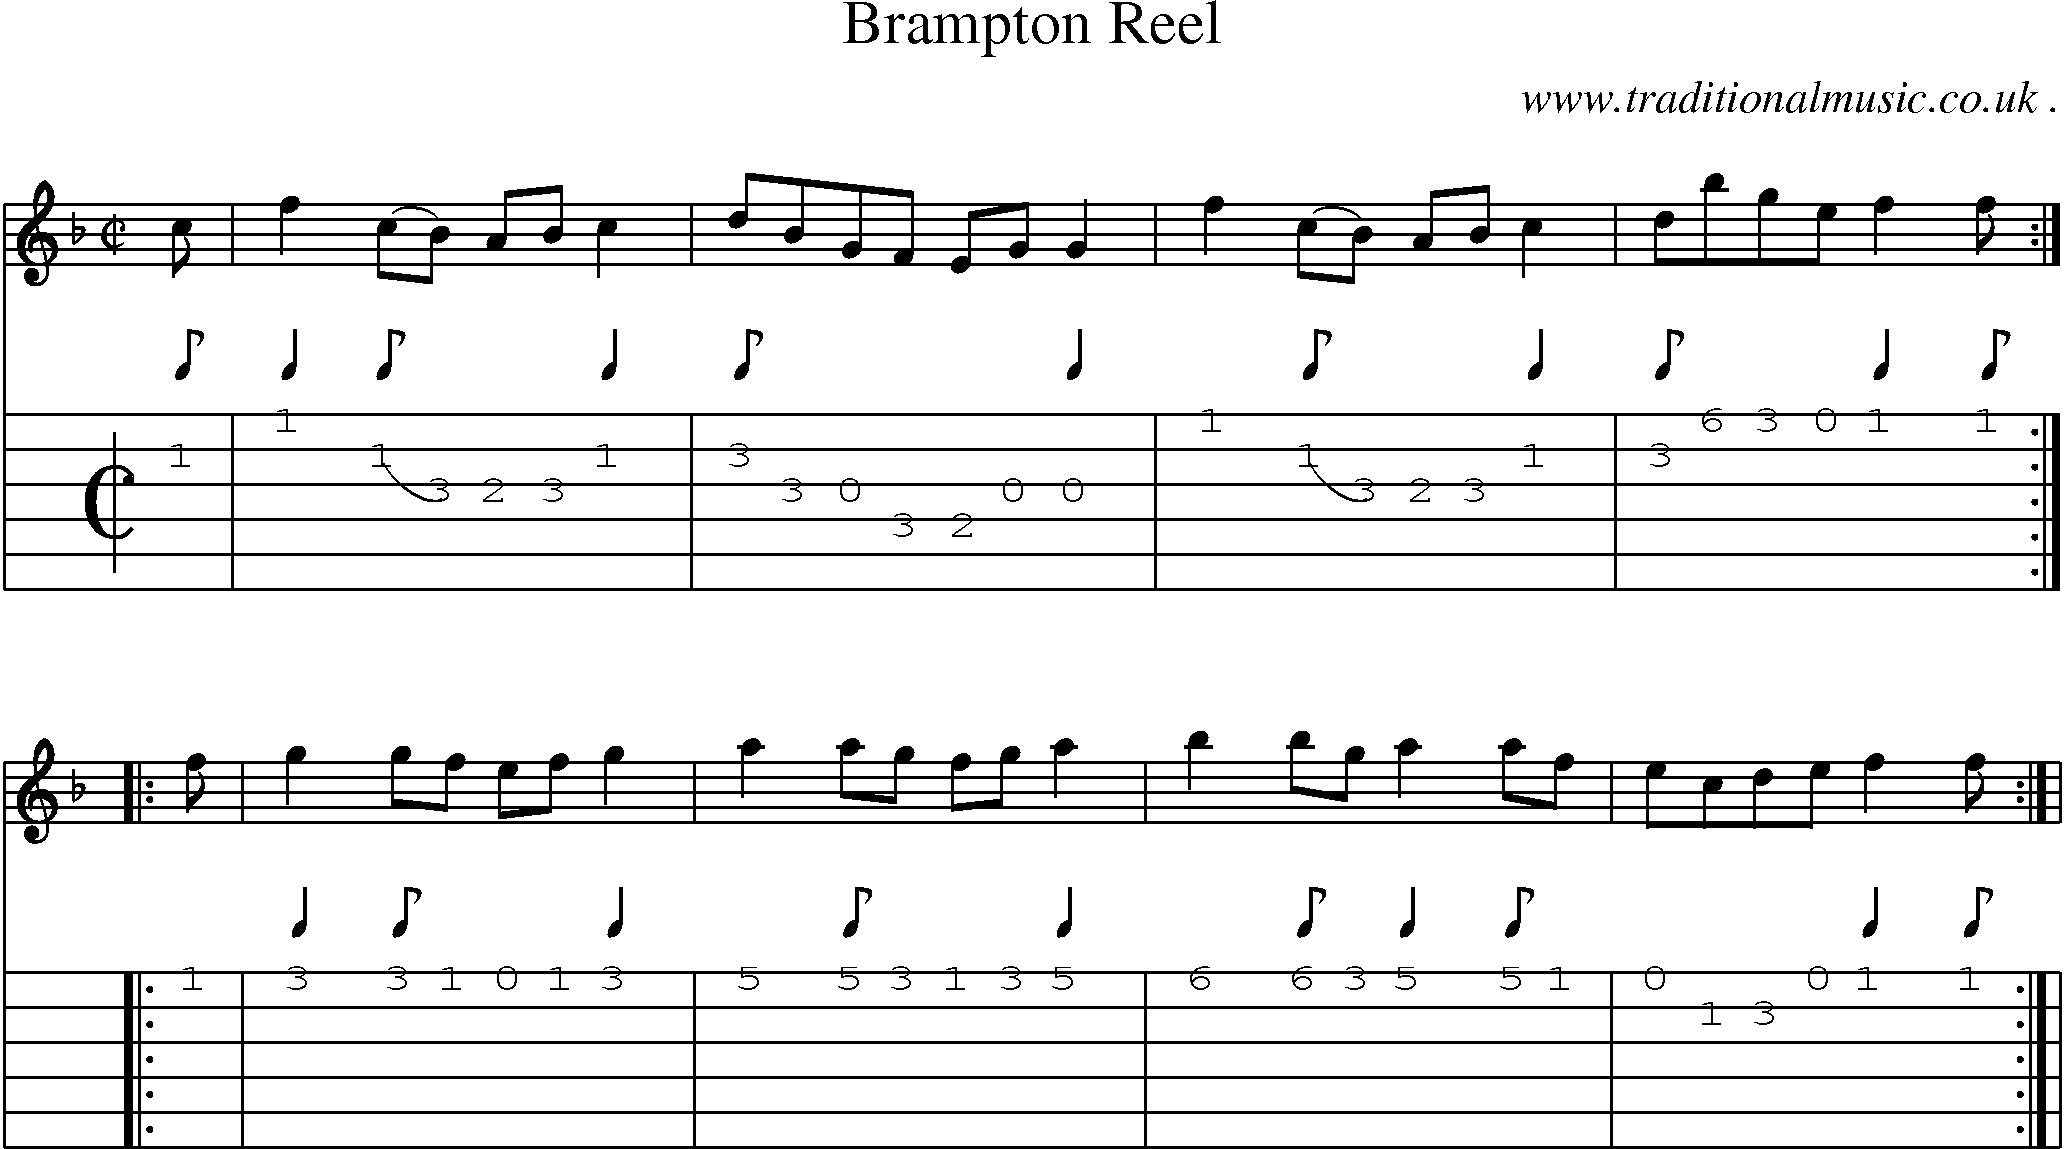 Sheet-Music and Guitar Tabs for Brampton Reel